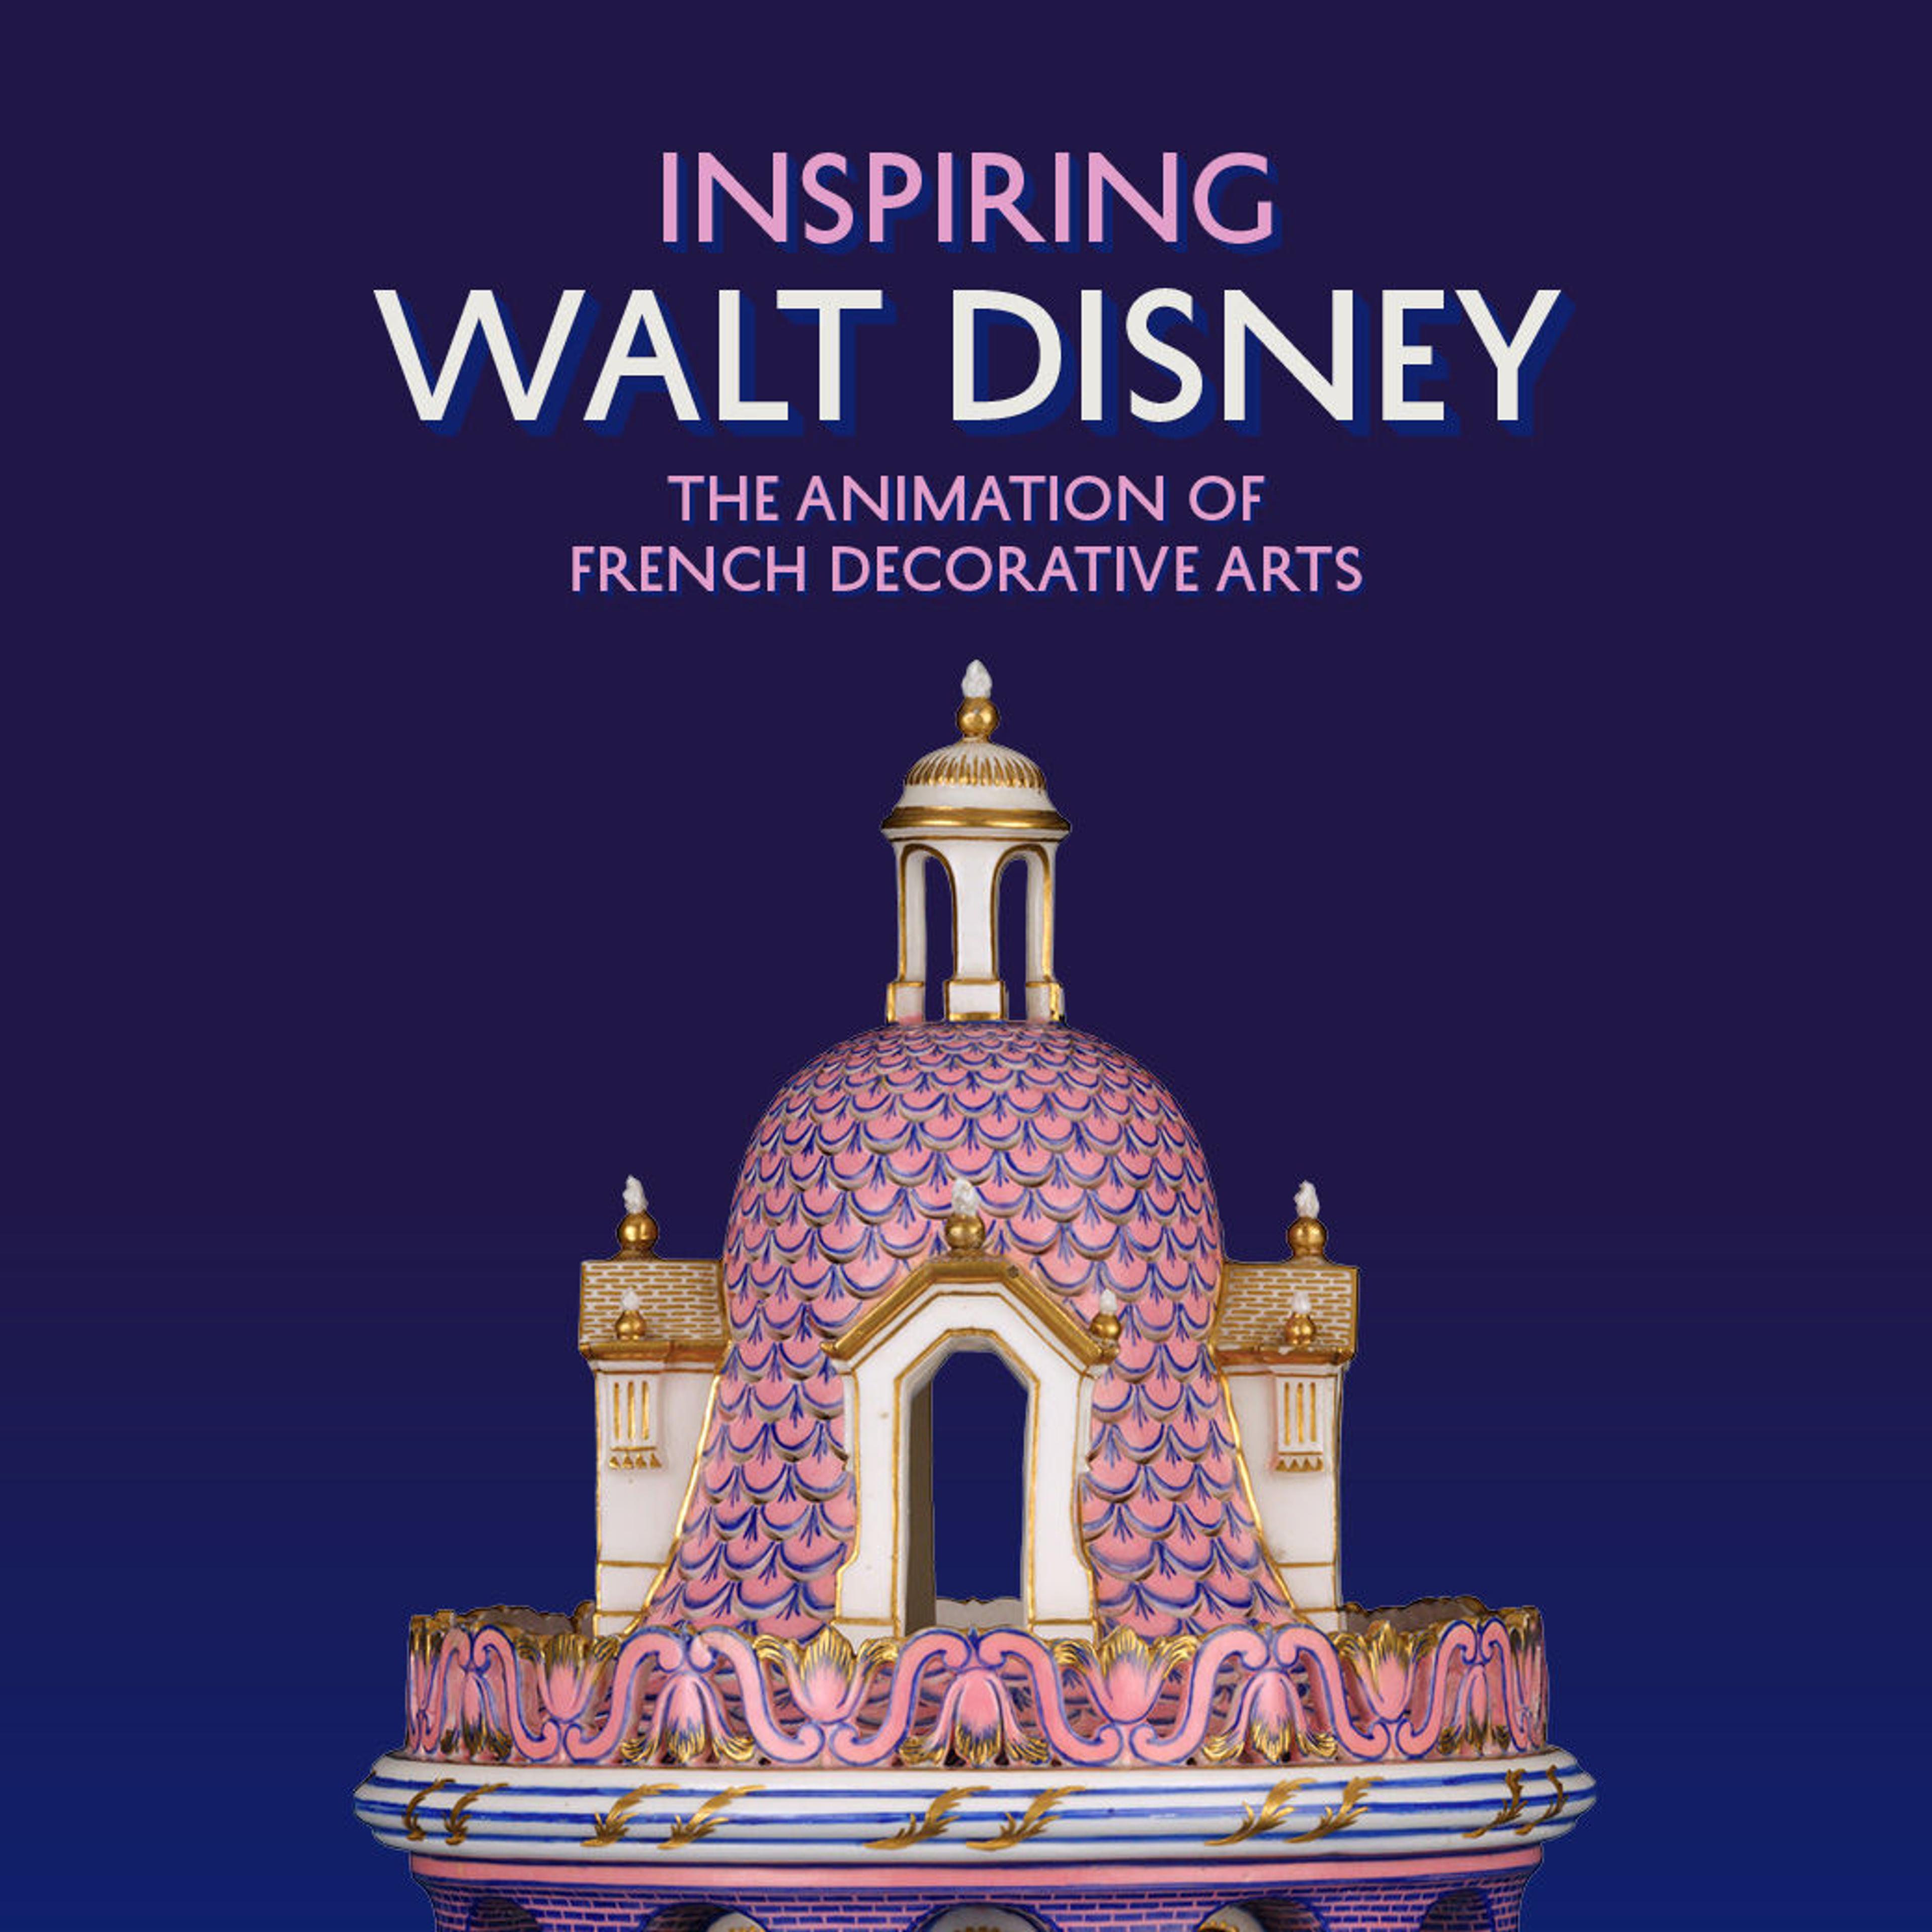 Walt Disney Studios Original and Limited Edition Art - Artinsights Film Art  Gallery